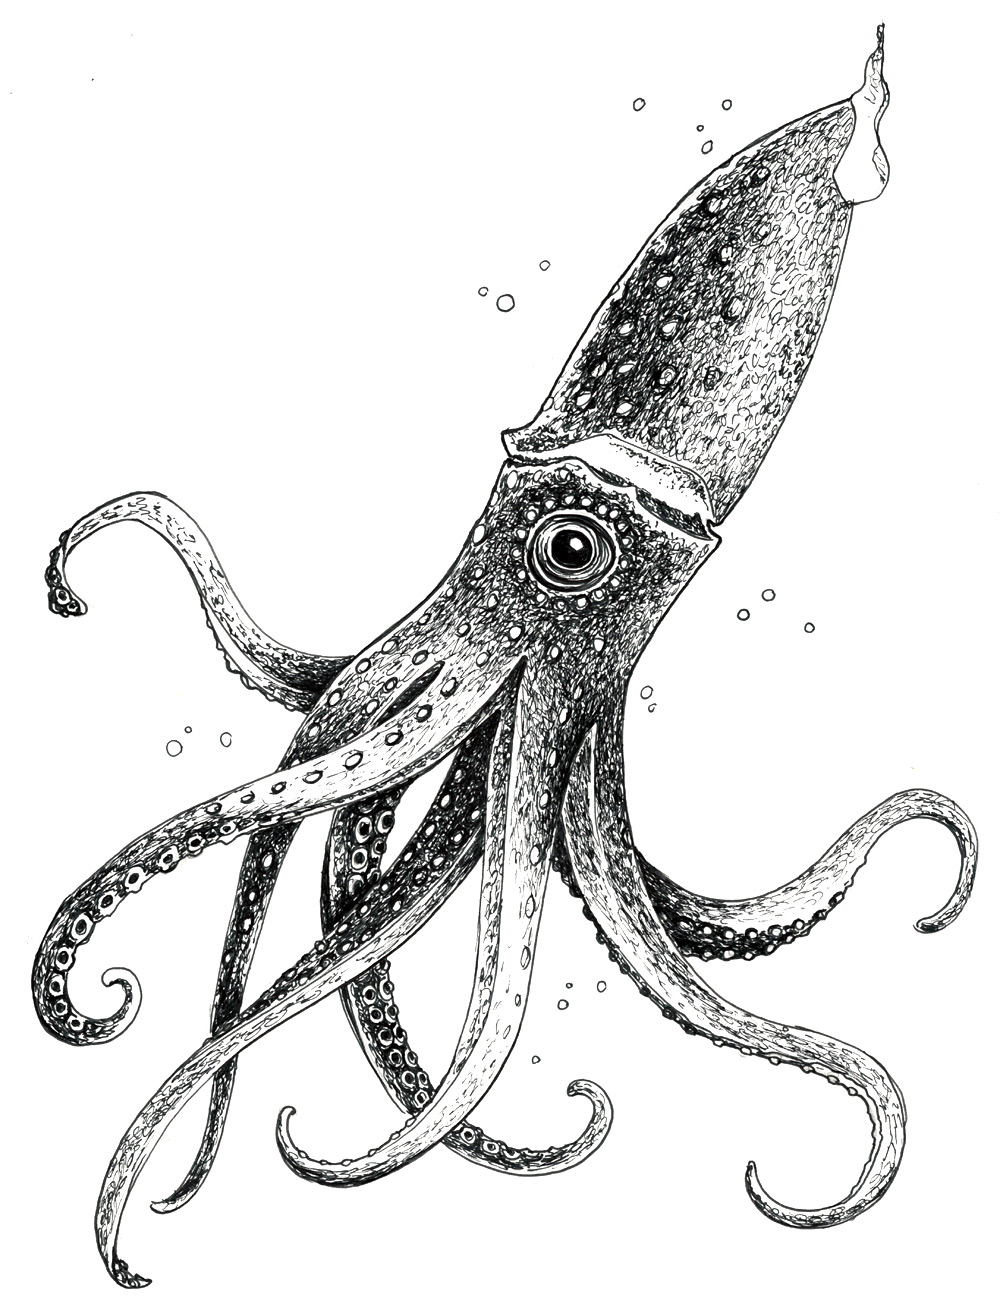 squid-sketch